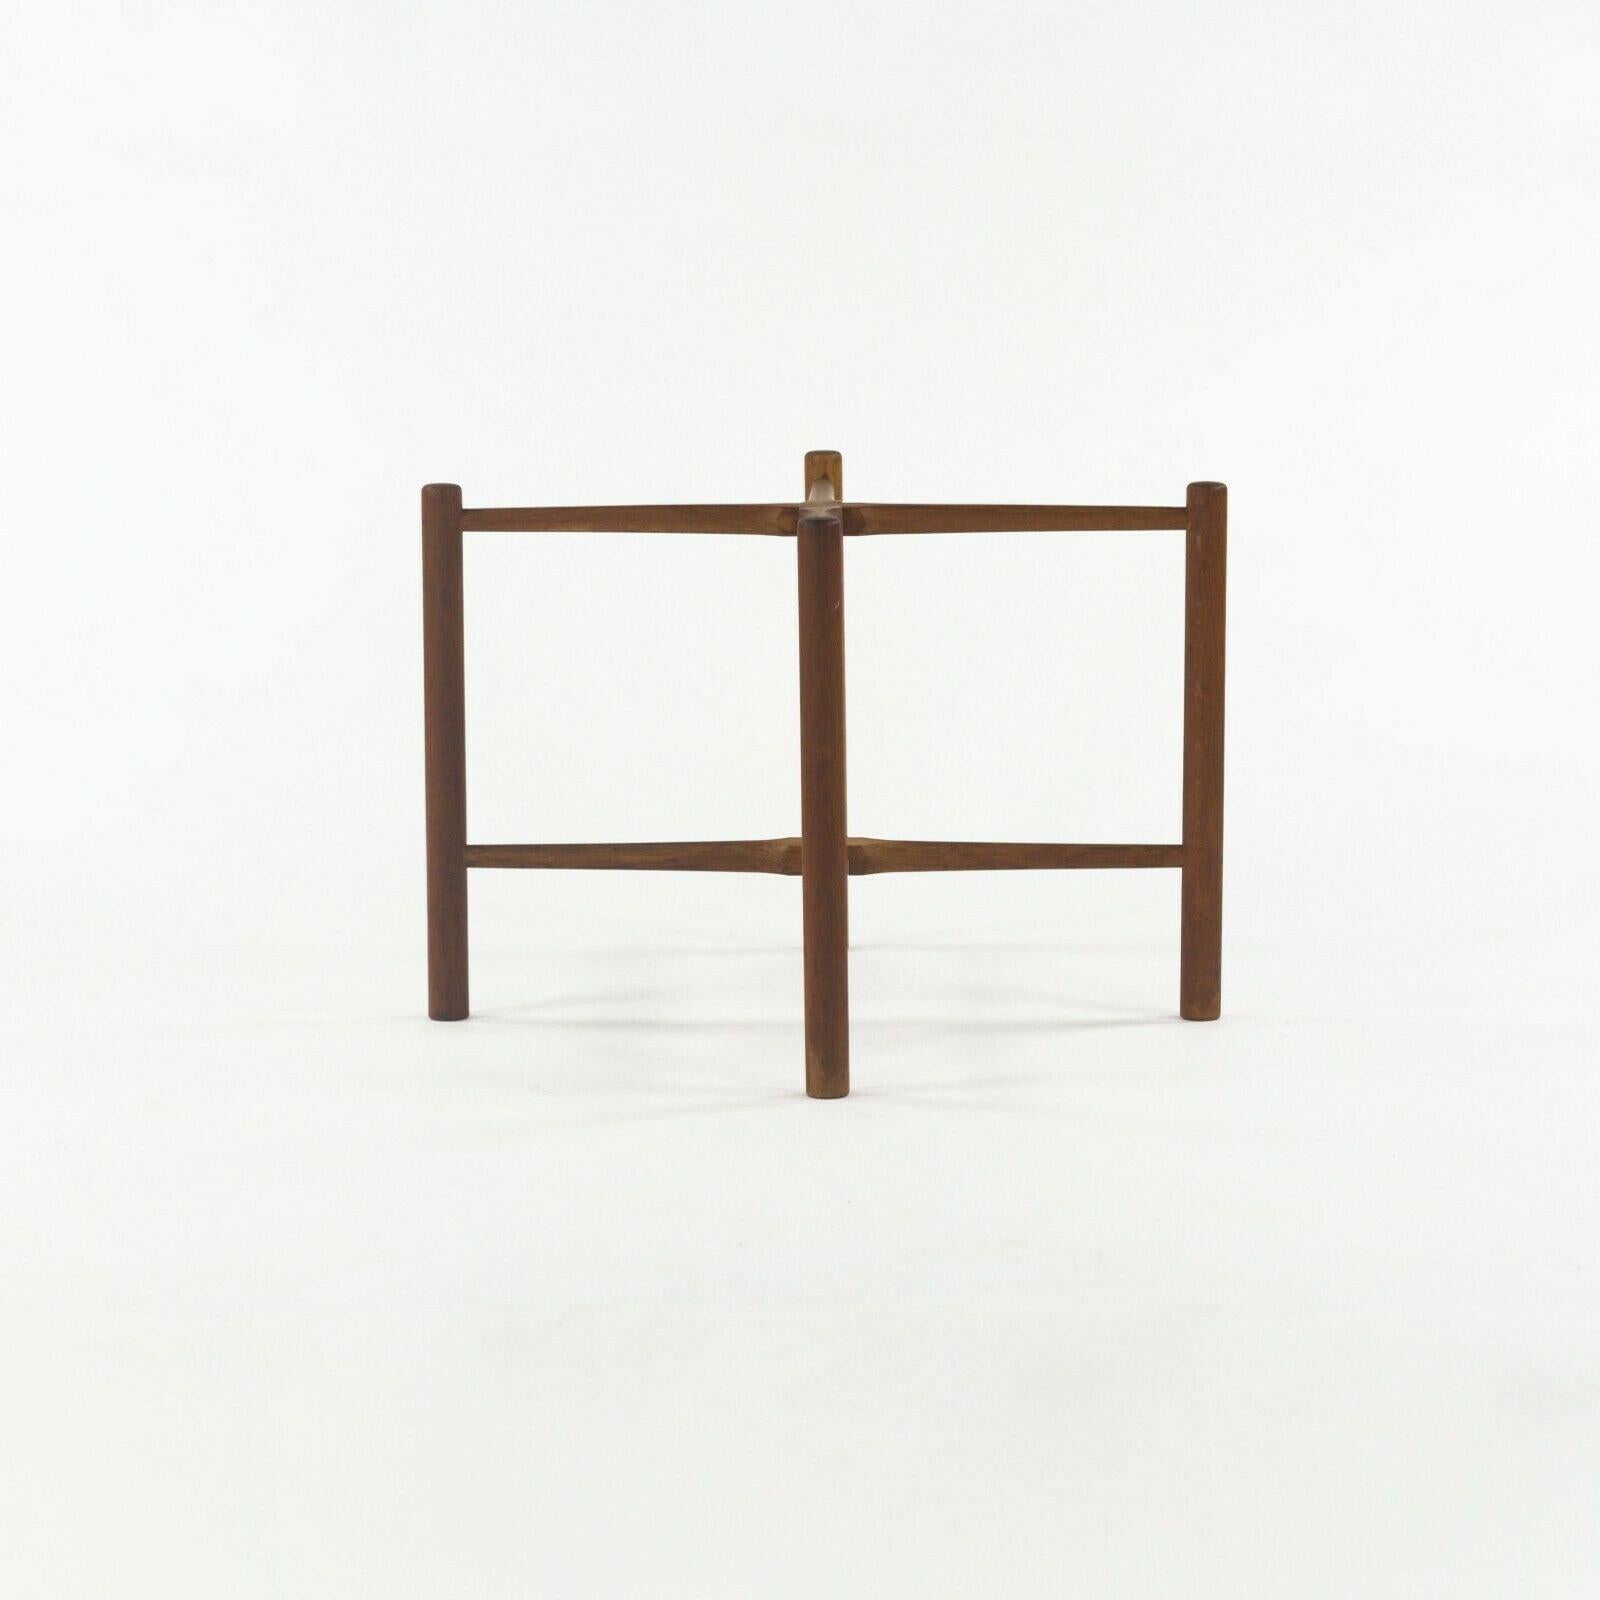 Mid-20th Century 1960 PP35 Hans Wegner for &reas Tuck Folding Teak & Oak Side Table 2x Available For Sale